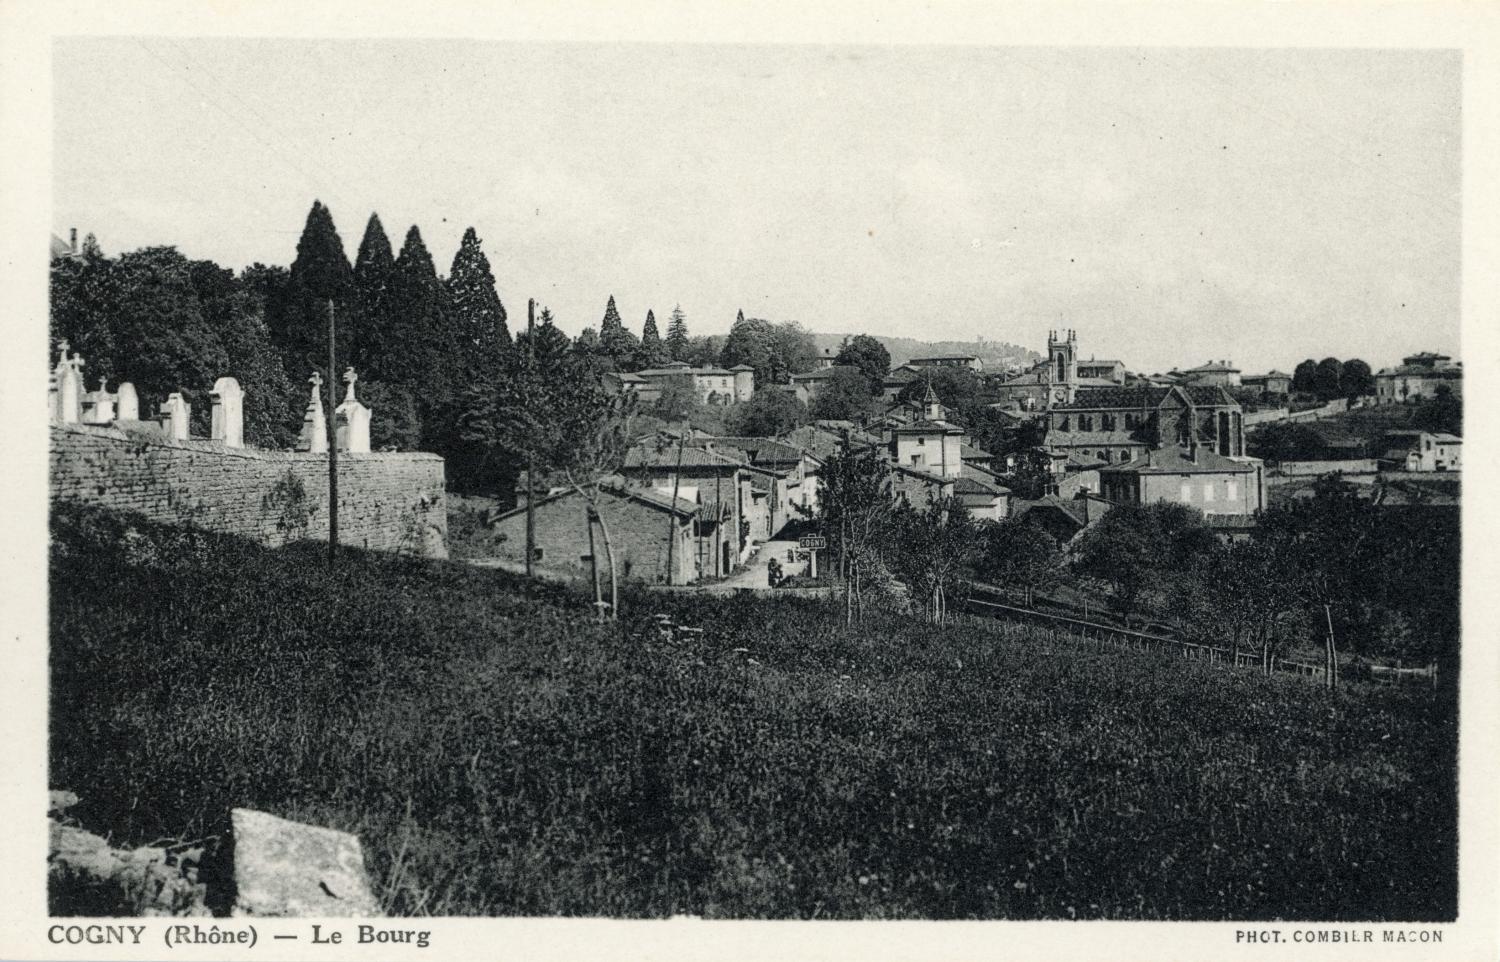 Cogny (Rhône). - Le Bourg